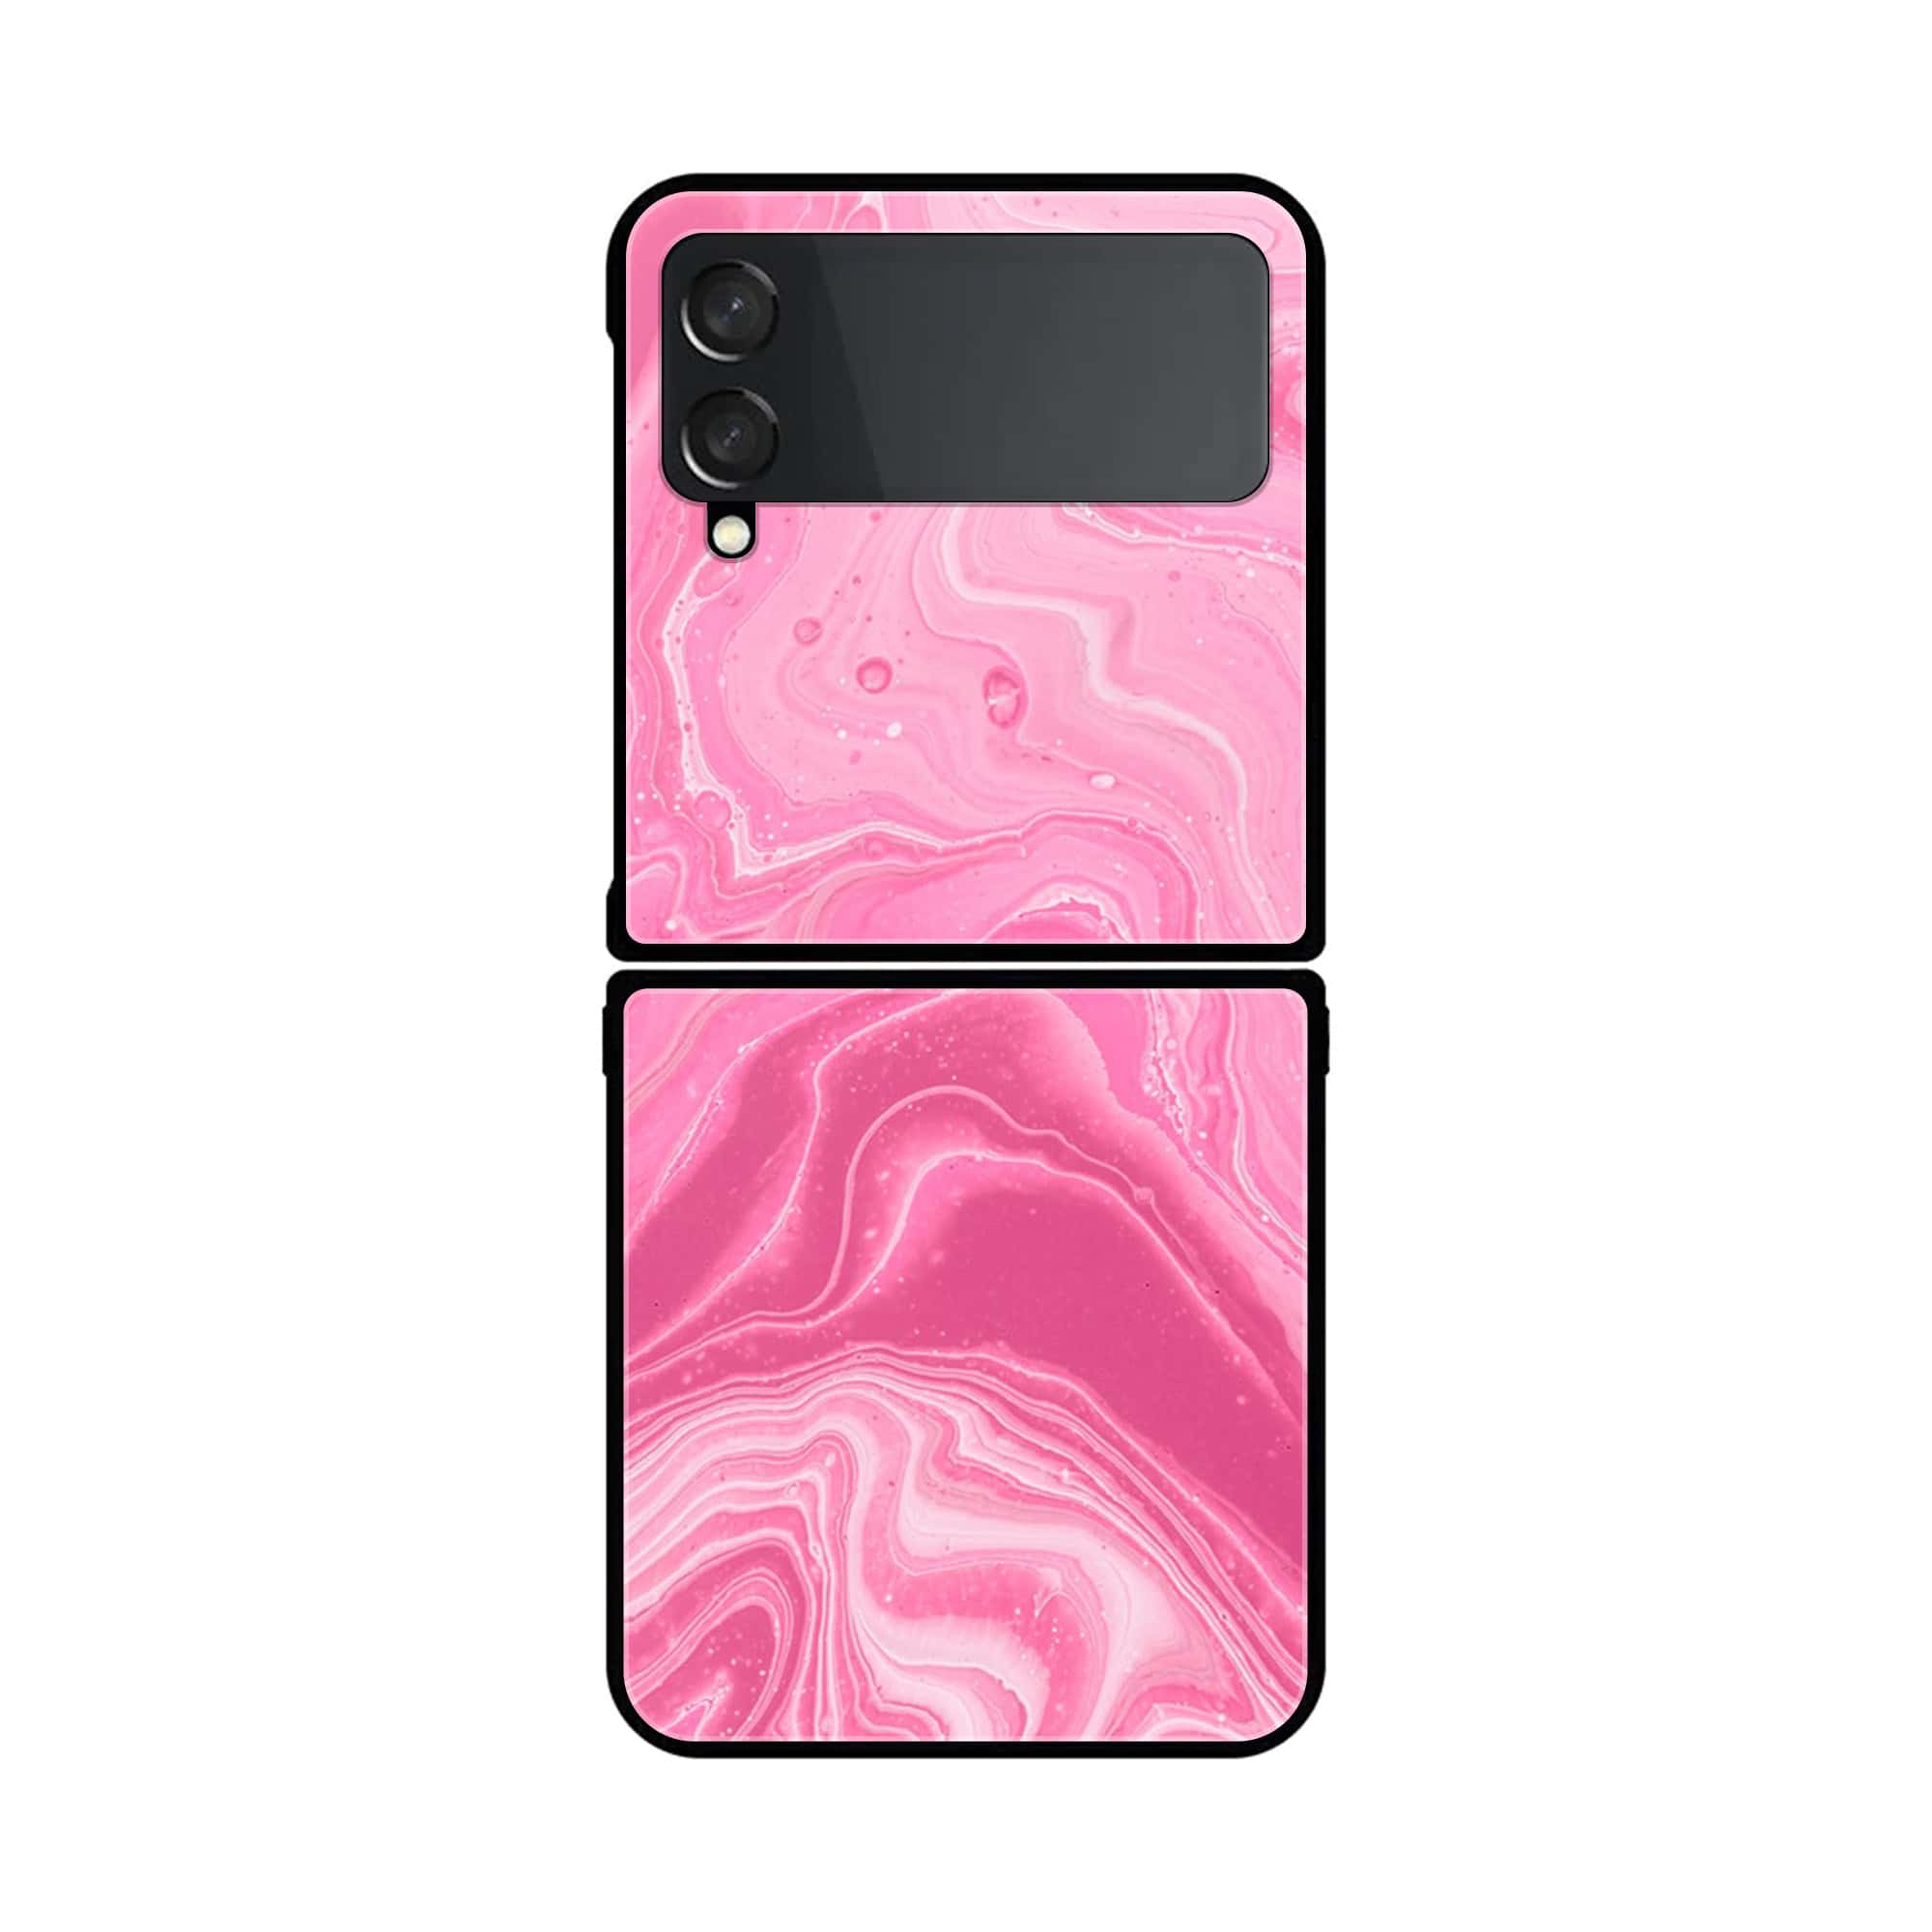 Z Flip 4- Pink Marble Series -  Premium Printed Glass soft Bumper shock Proof Case